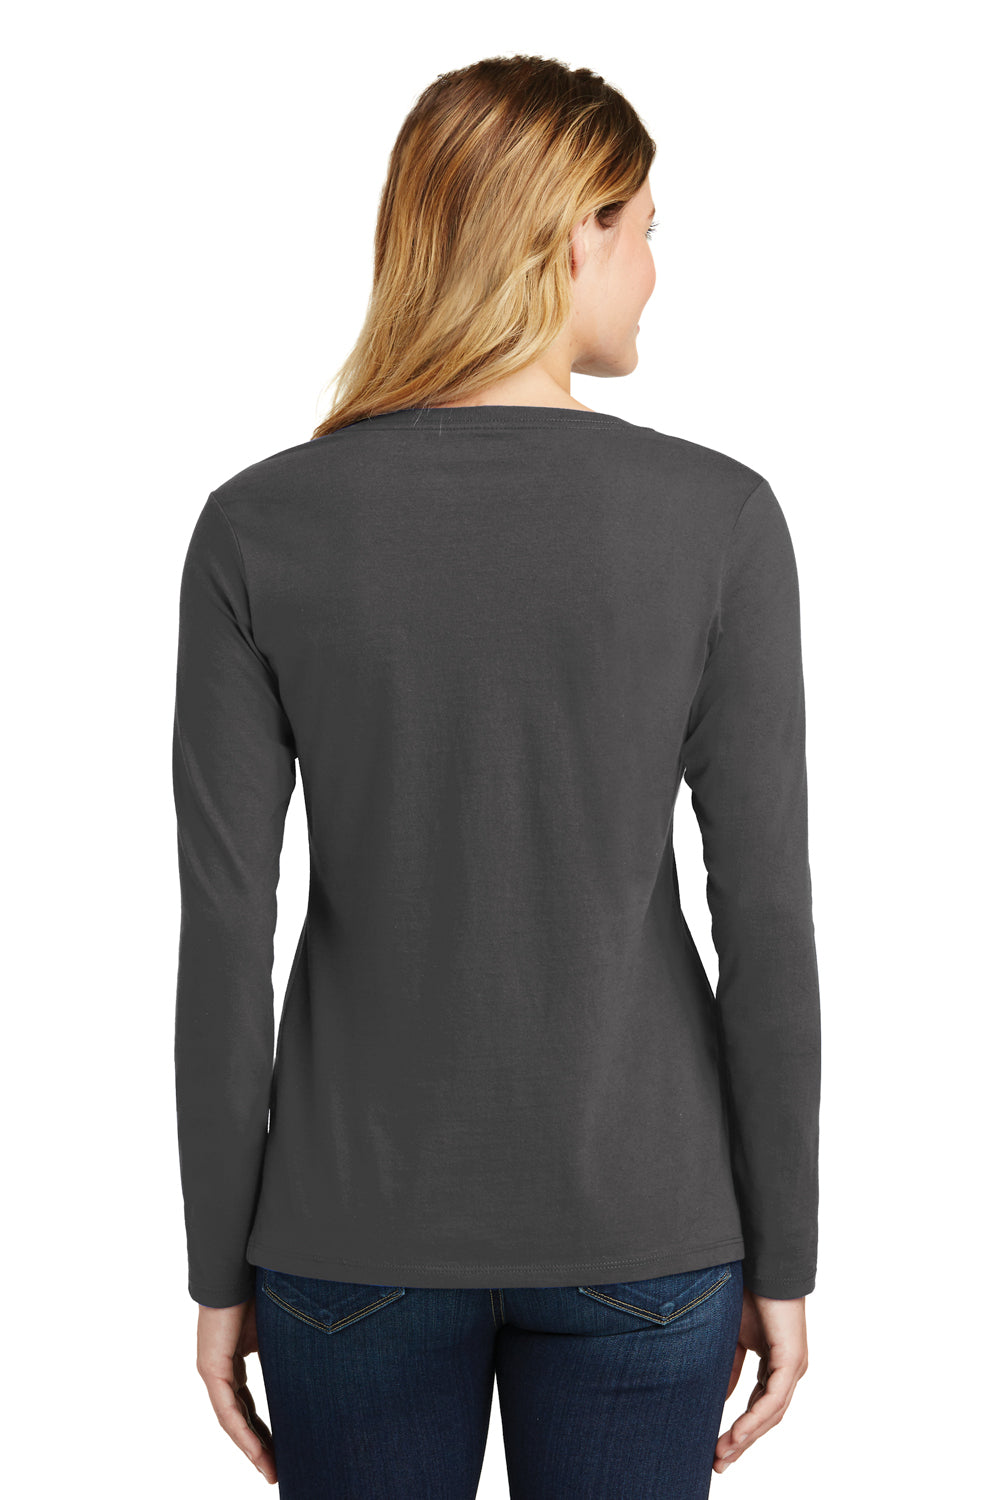 Port & Company LPC450VLS Womens Fan Favorite Long Sleeve V-Neck T-Shirt Charcoal Grey Back